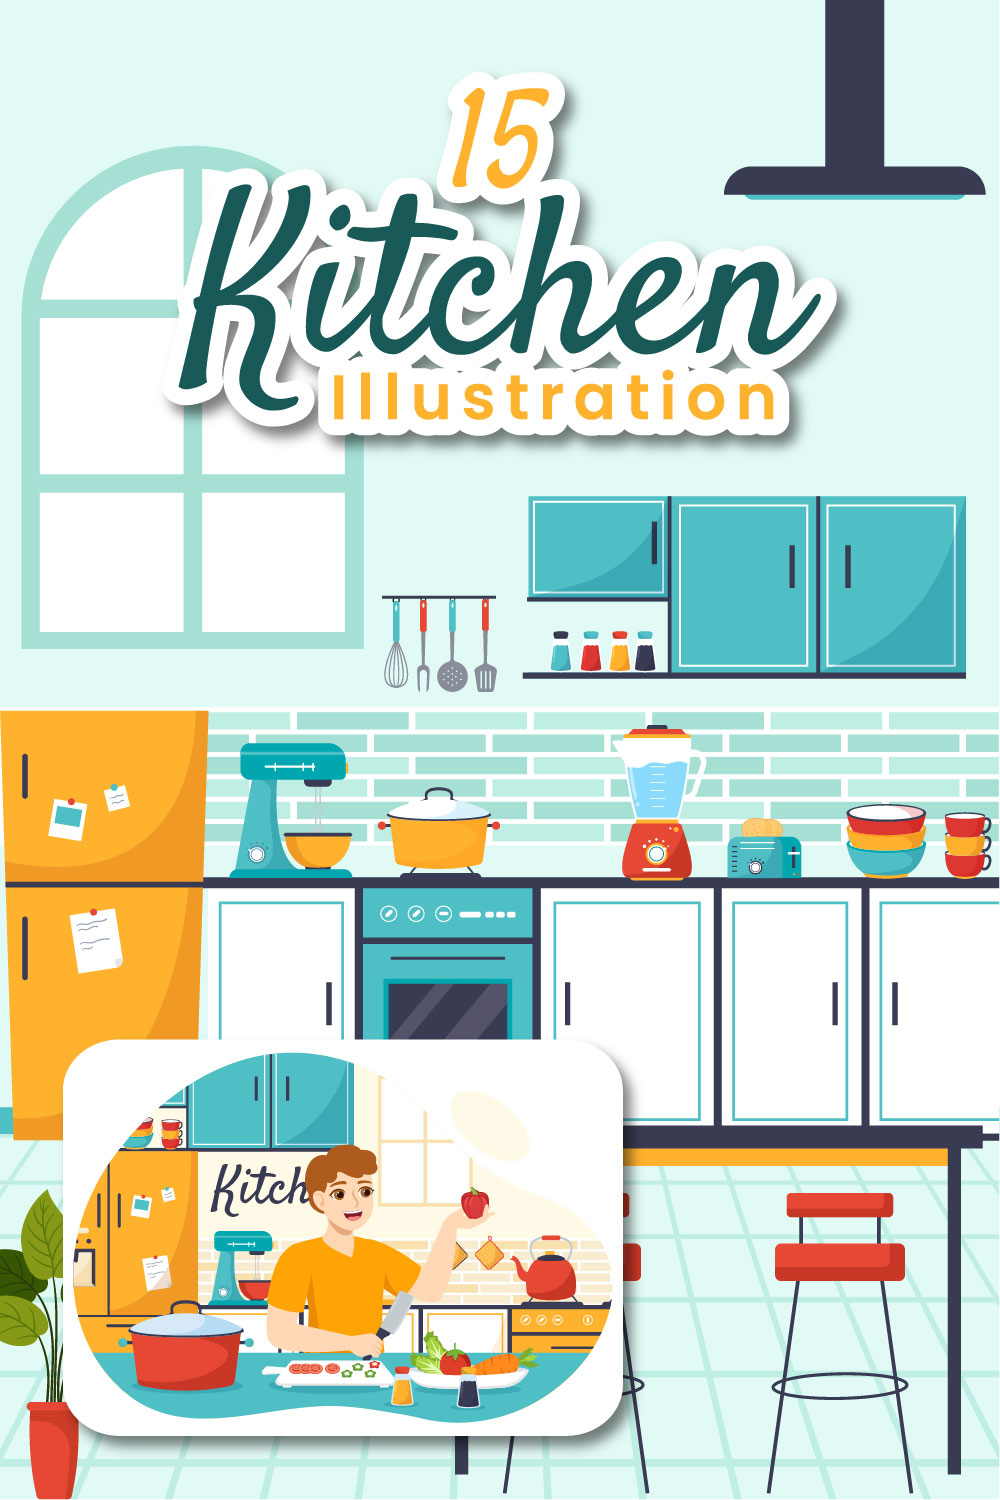 15 Kitchen Architecture Illustration pinterest preview image.